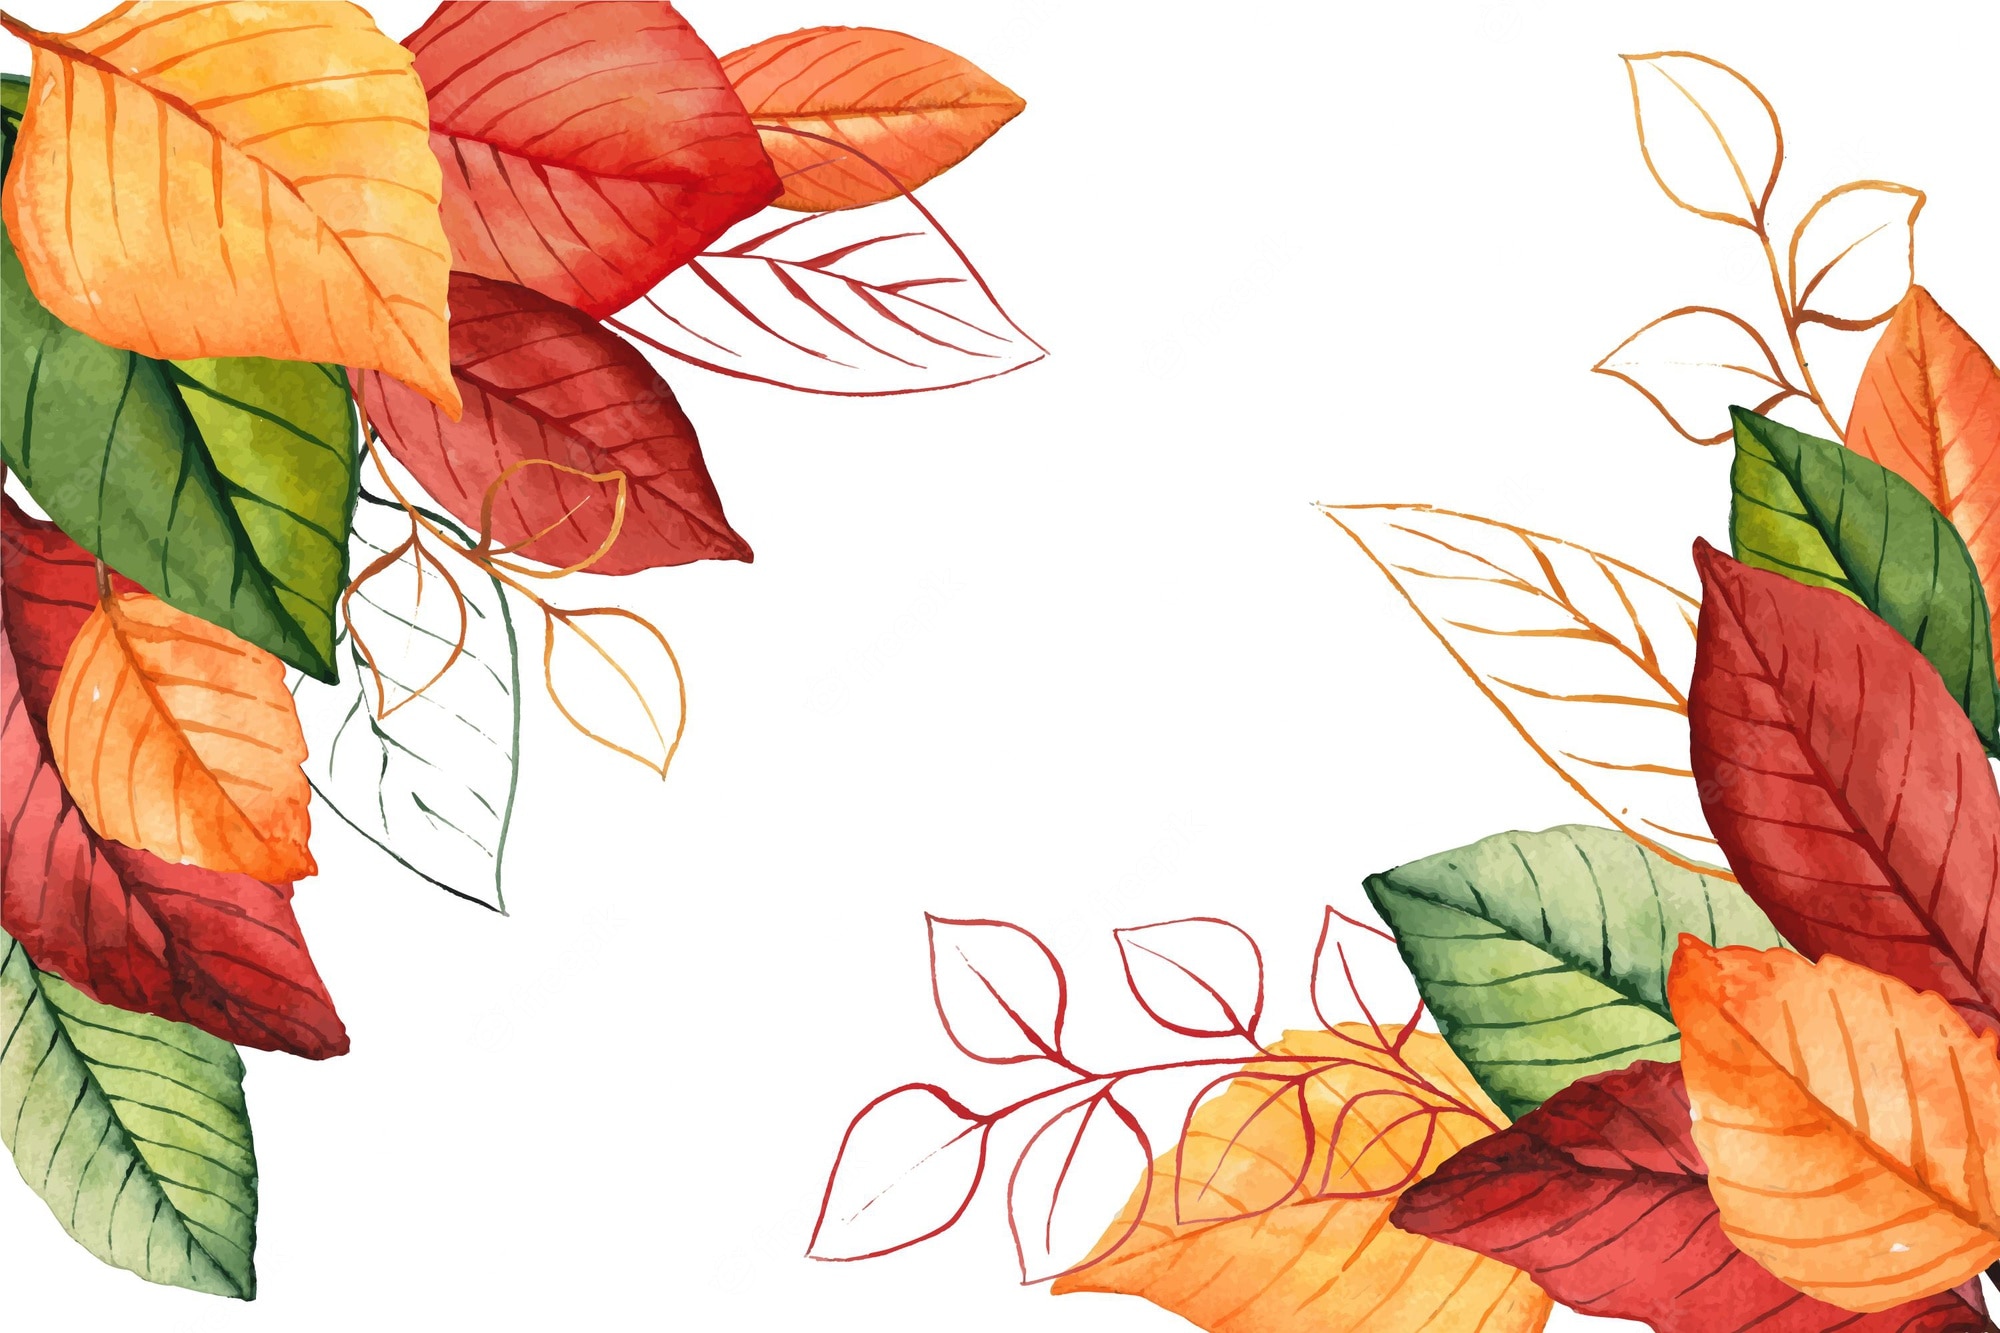 Fall watercolor Image. Free Vectors, & PSD